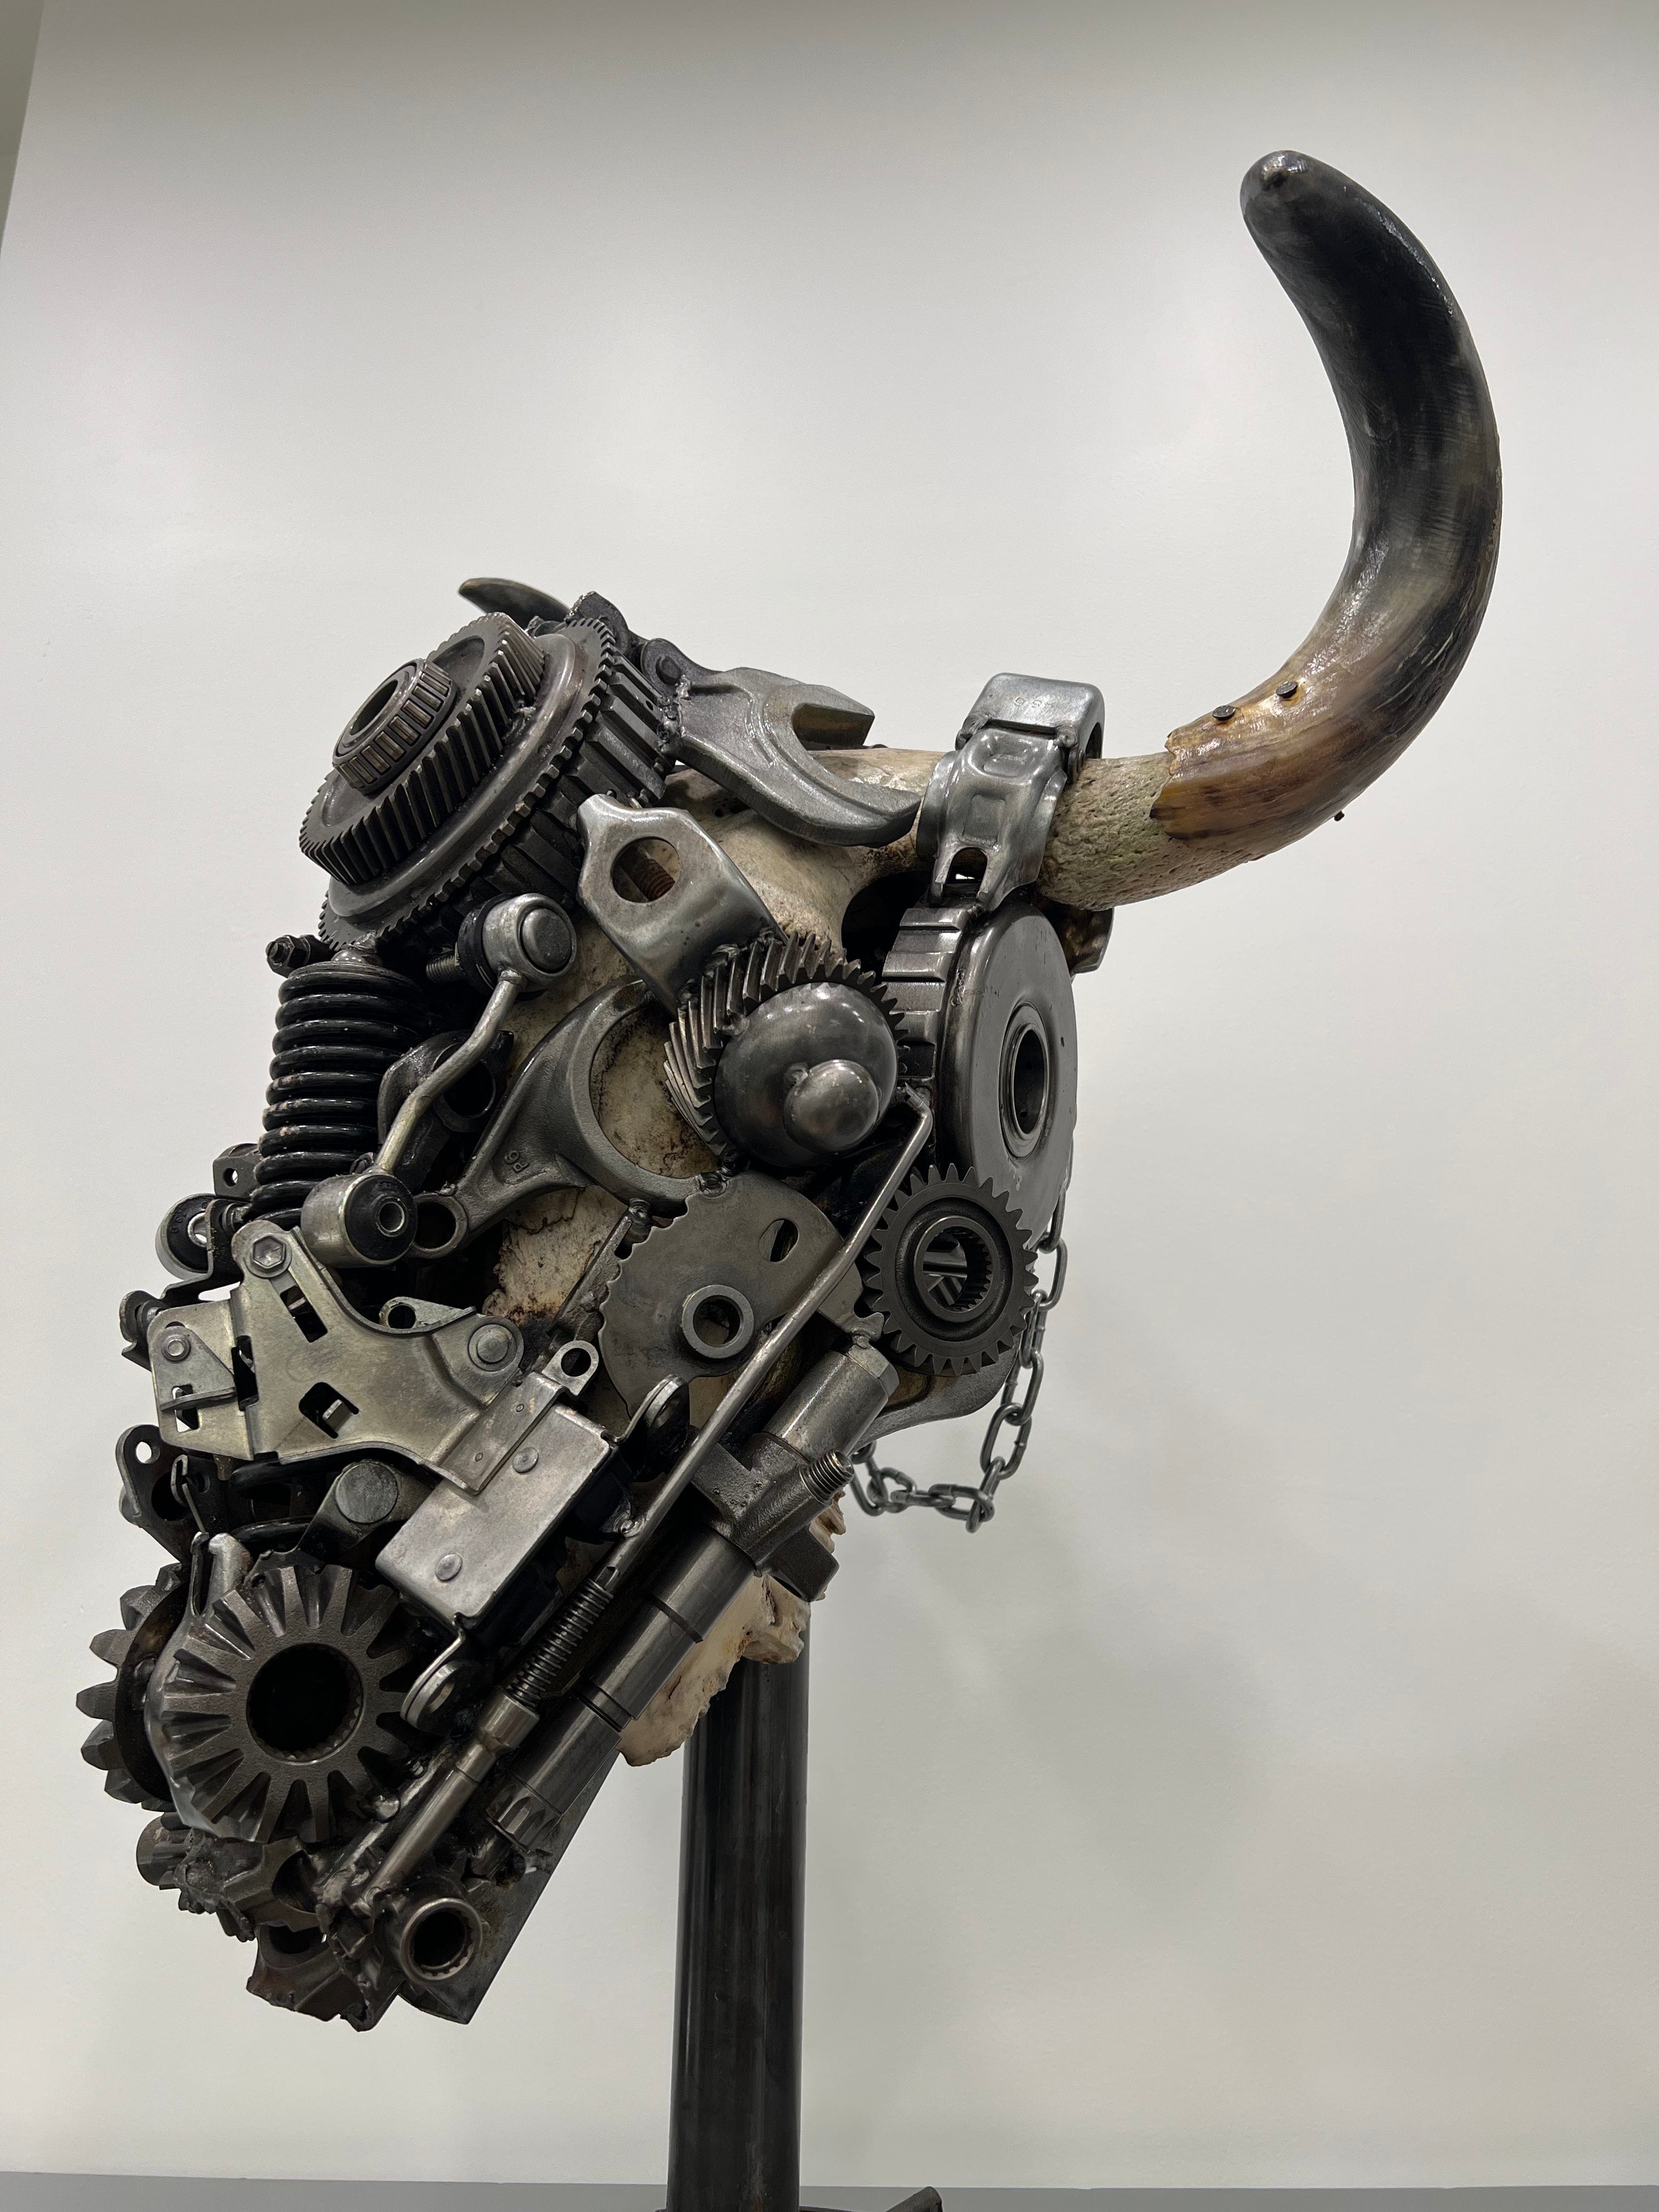 Kalifano Recycled Metal Art Bull Skull Recycled Metal Art Sculpture RMS-BSK-S69